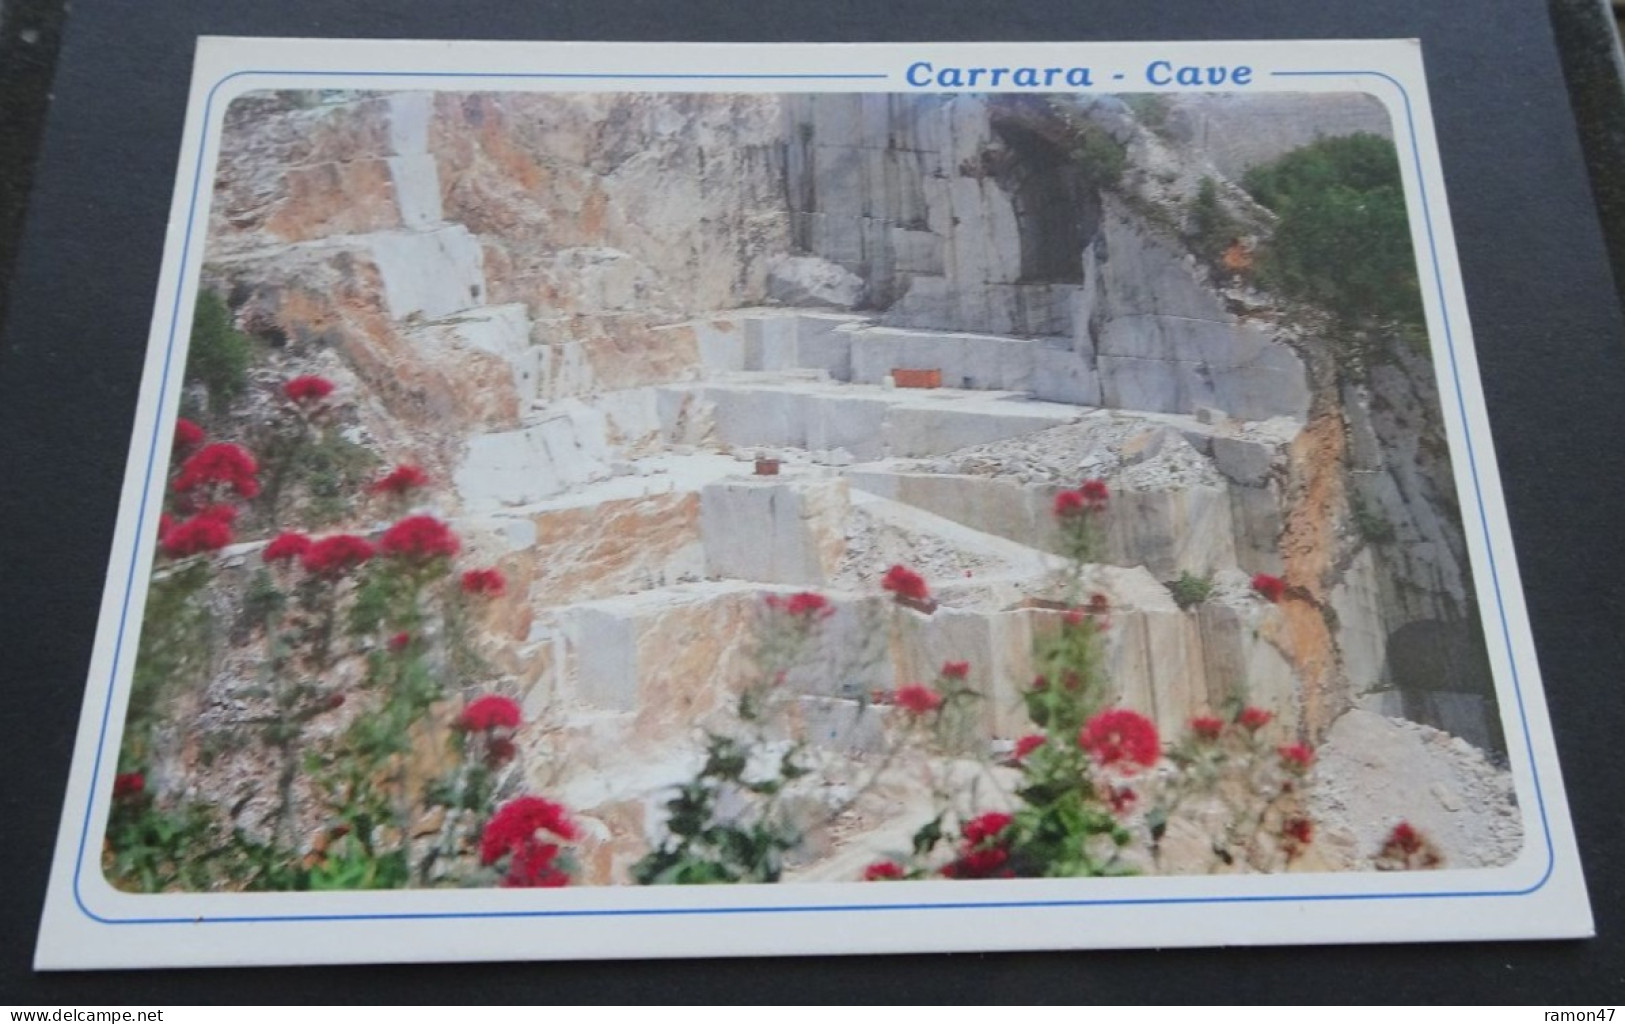 Carrara - Cave - Garami, Milano - Ed. Maurizio - # CAR 81/92 - Carrara